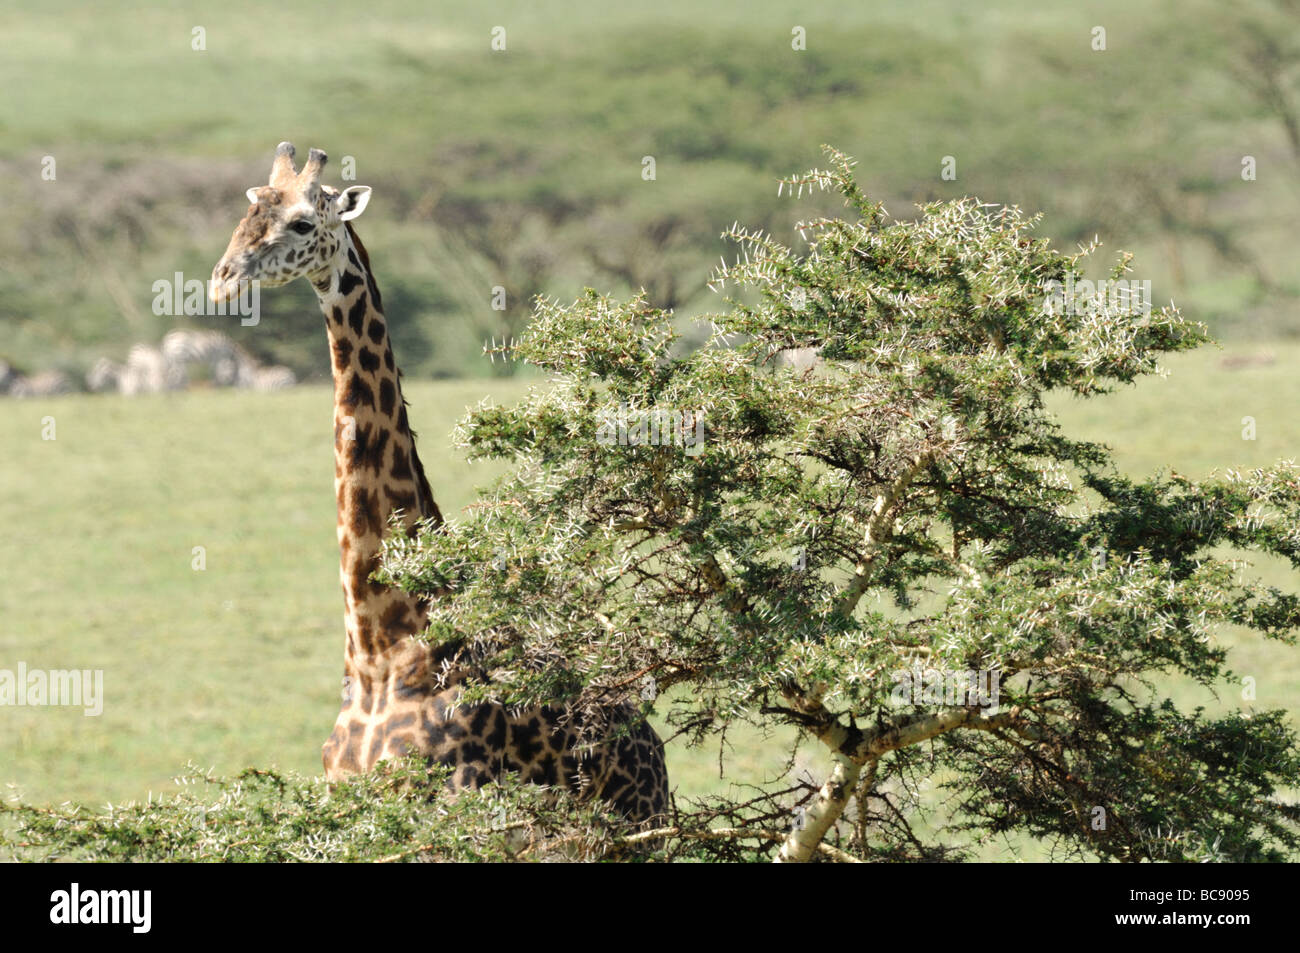 Stock photo of a Masai giraffe standing behind an acacia tree, Ngorongoro Conservation Area, Tanzania, February 2009. Stock Photo